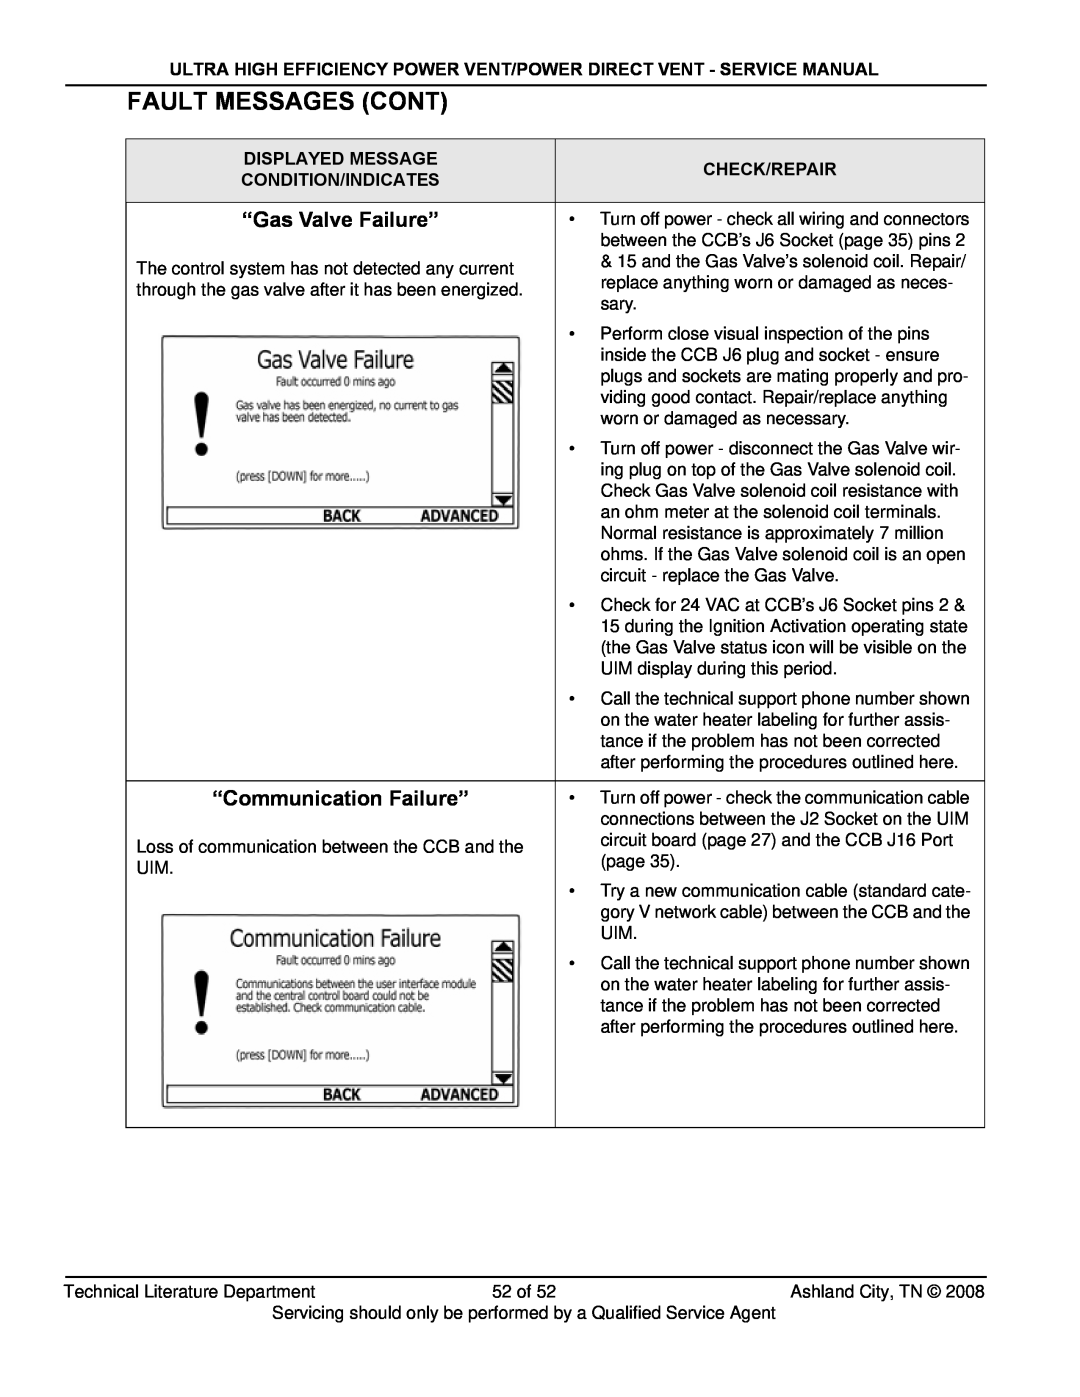 State Industries GP650HTPDT manual “Gas Valve Failure”, “Communication Failure”, Fault Messages Cont, Displayed Message 